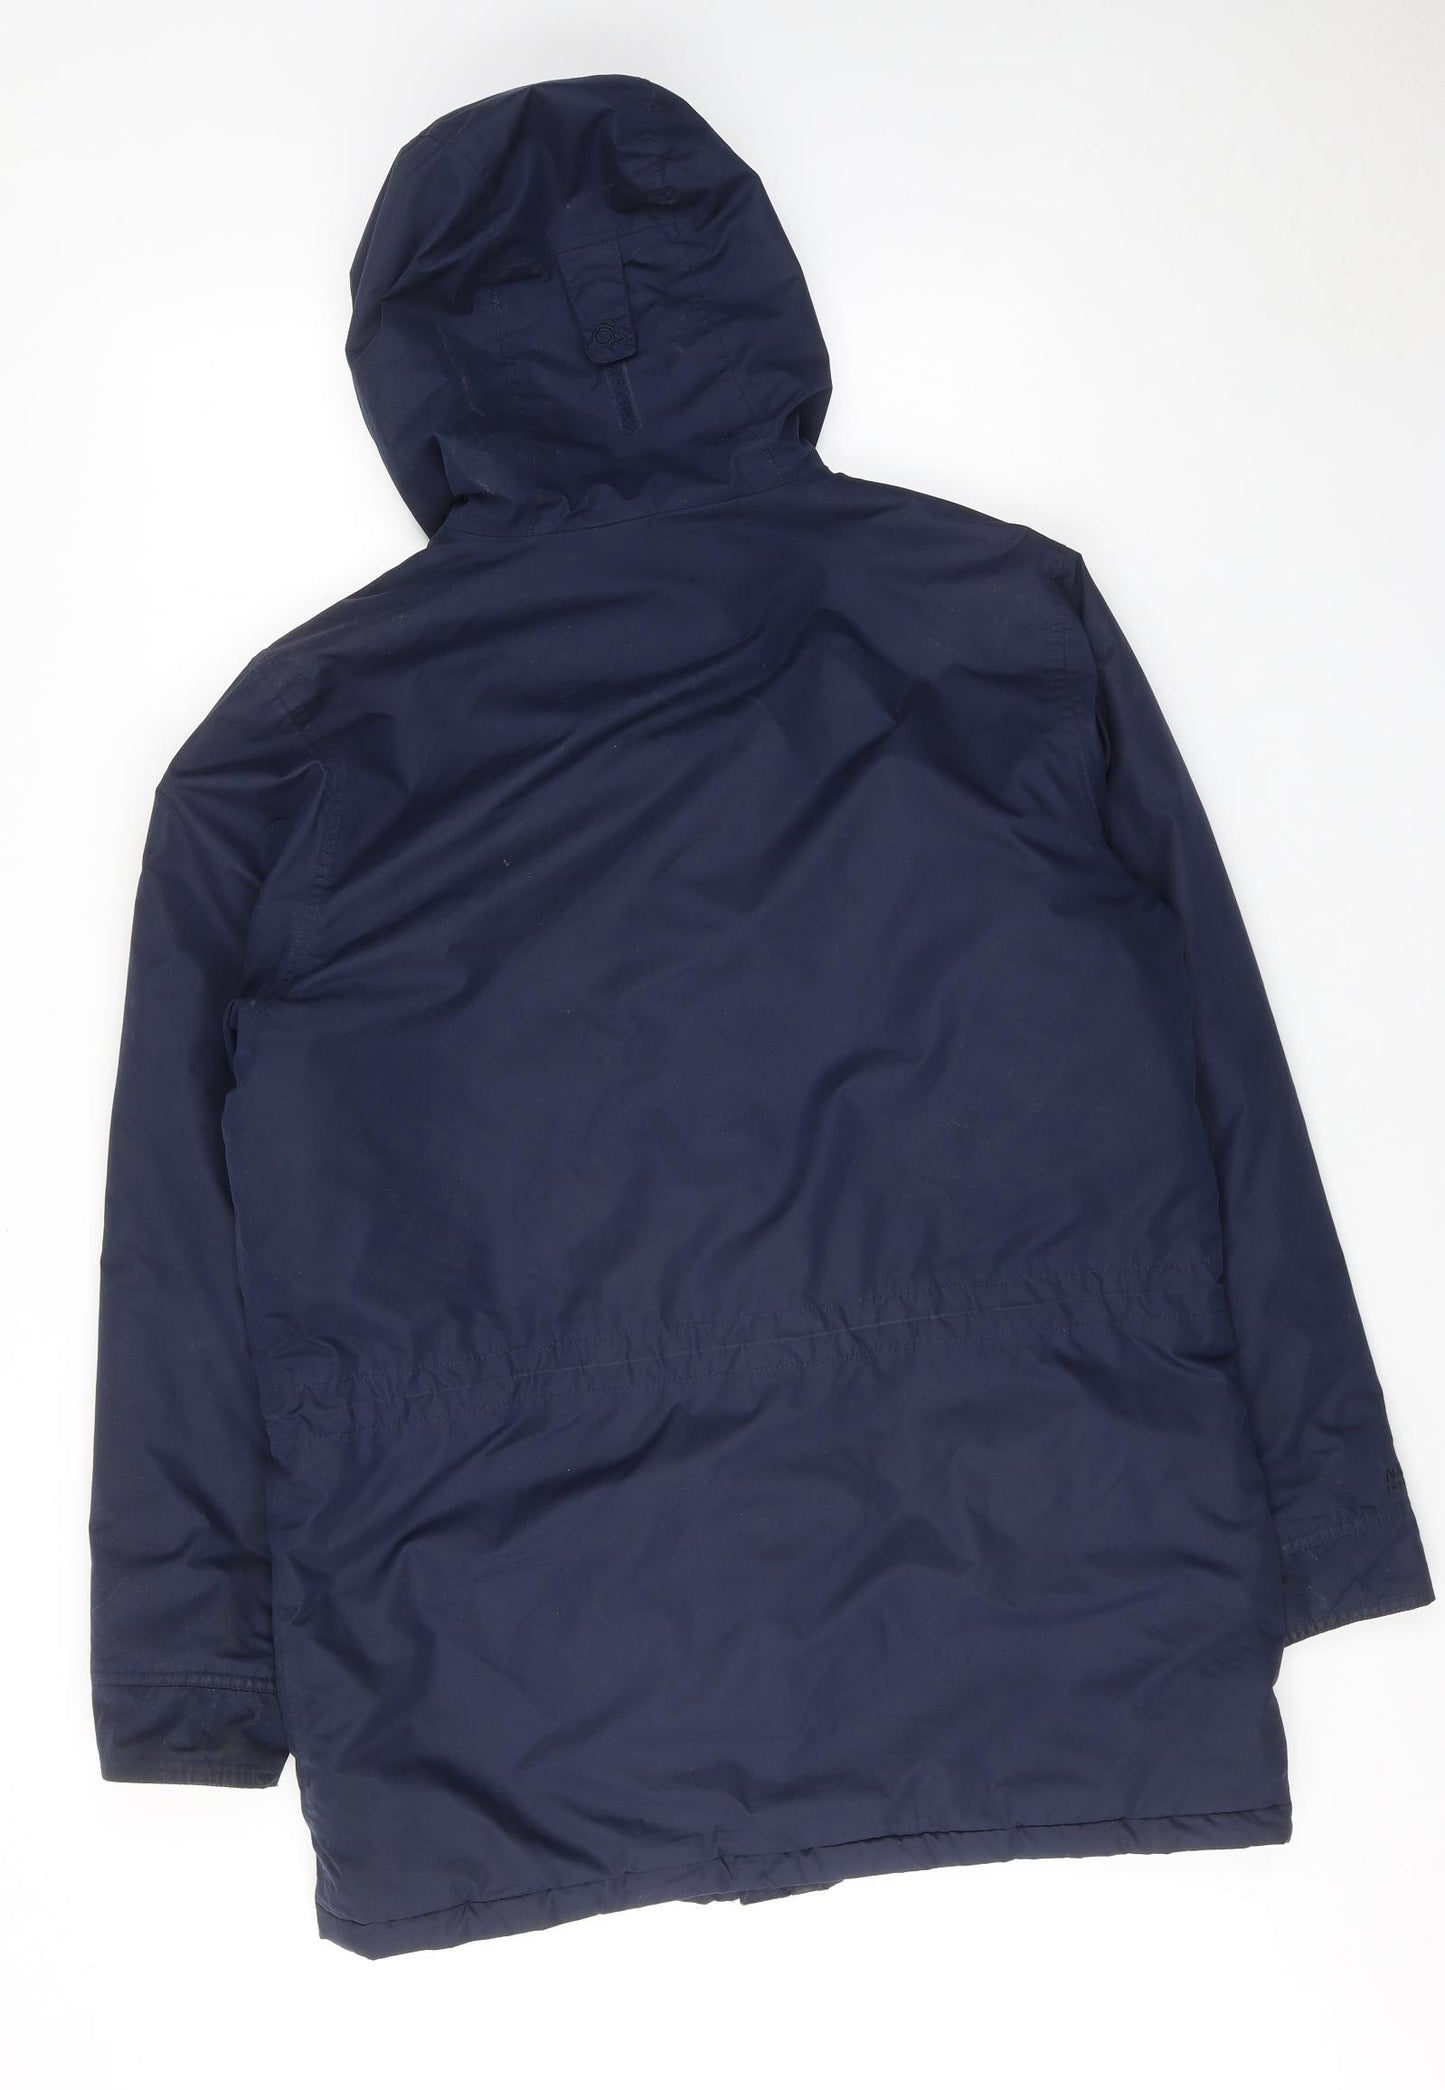 Cragho Mens Blue Windbreaker Jacket Size M Zip